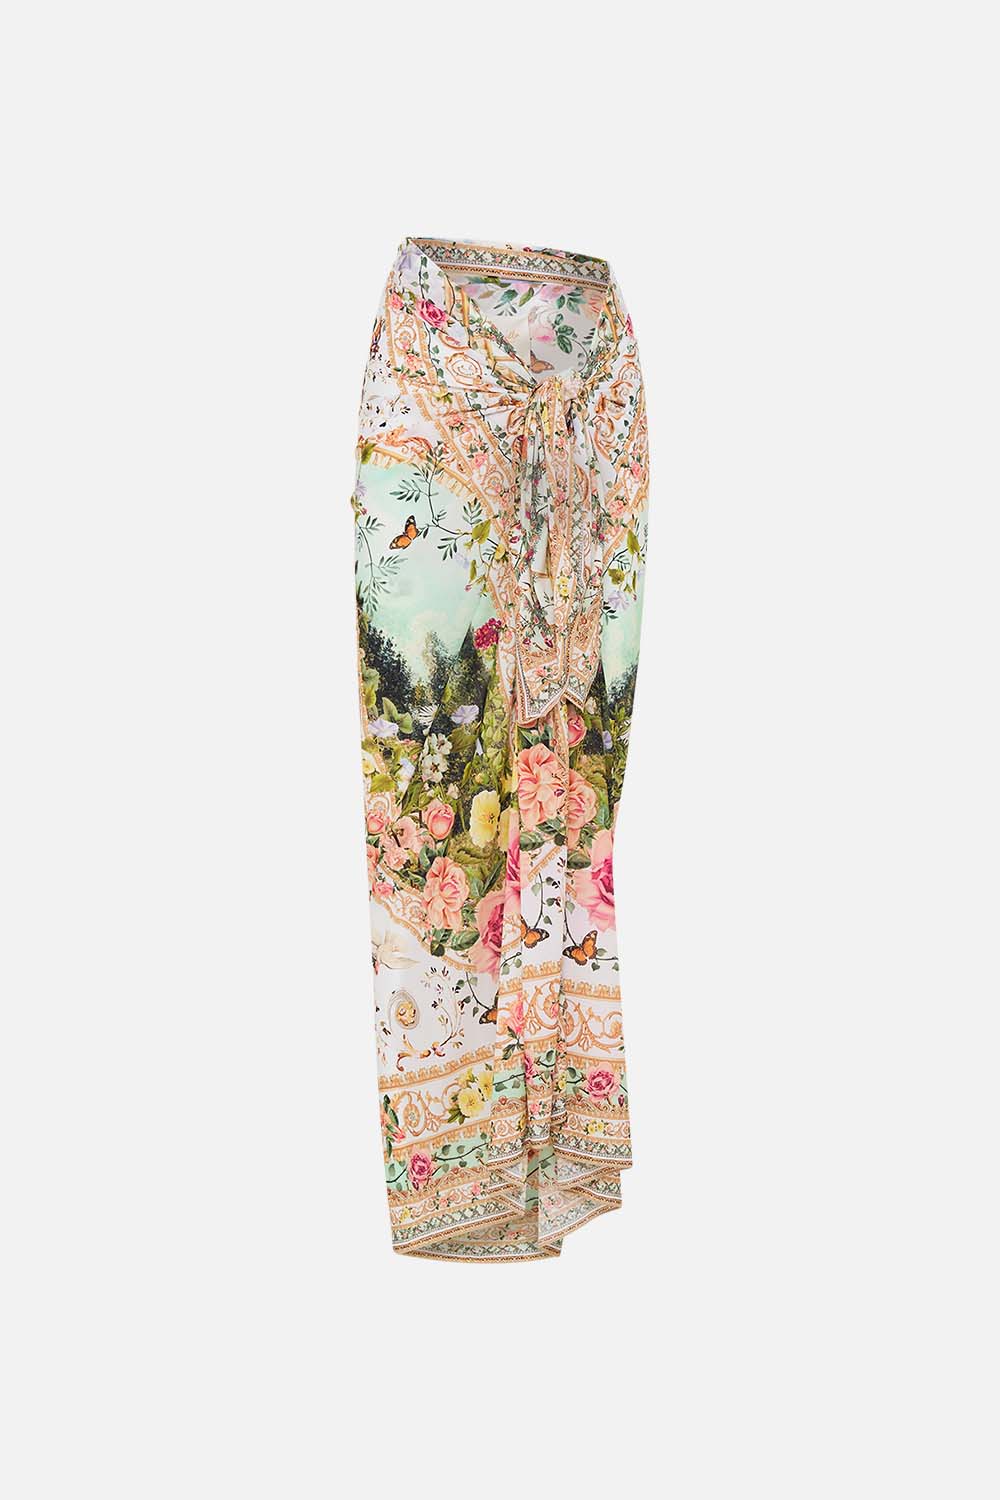 Product view of CAMILLA resortwear long sarong in Renaissance Romance print